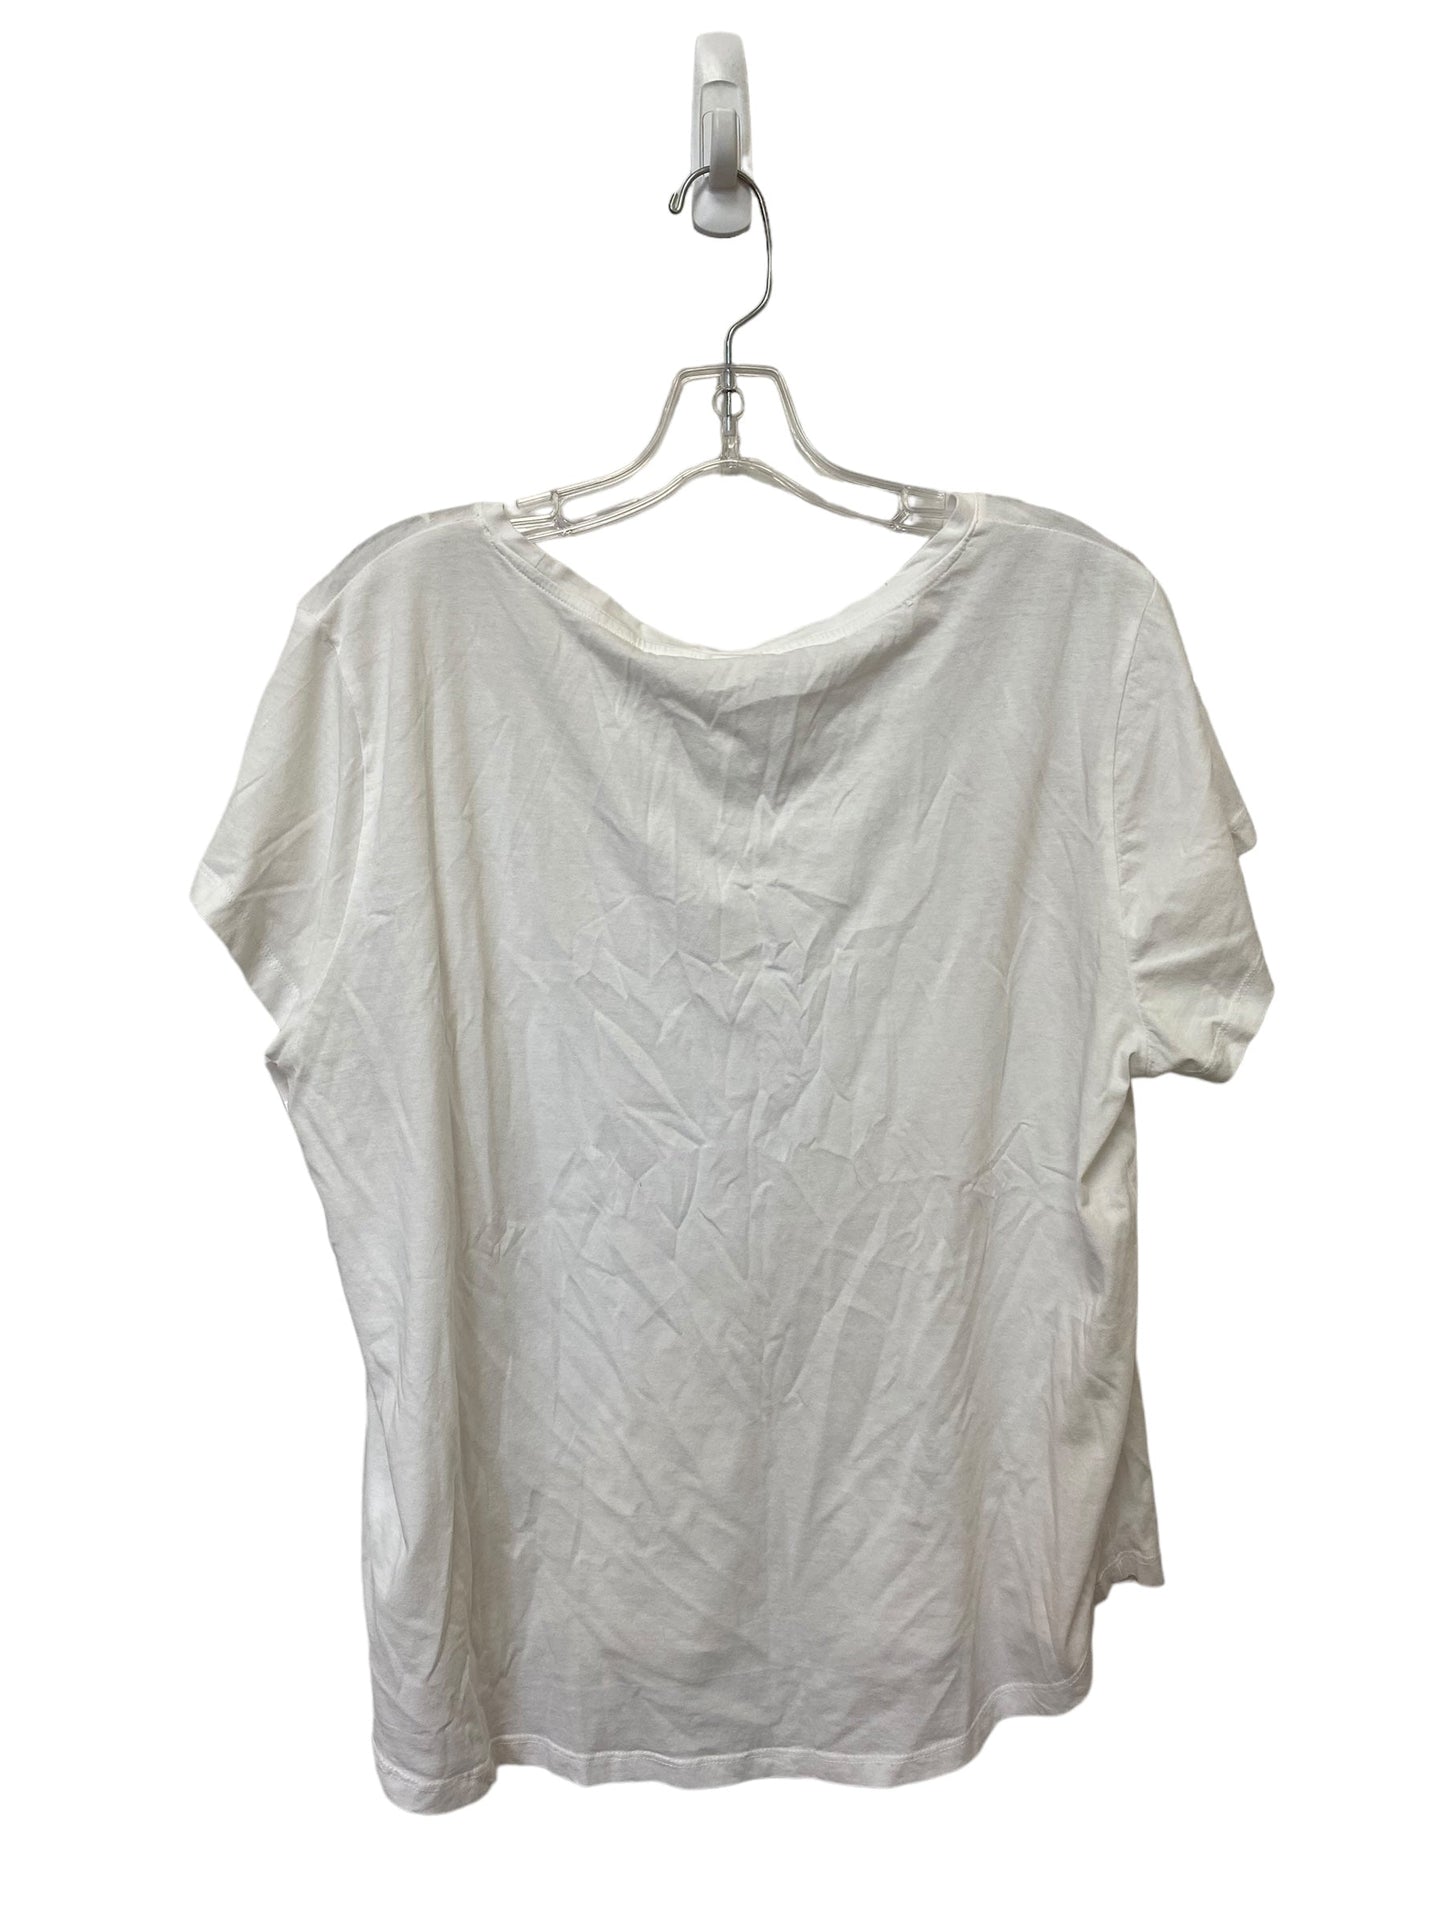 White Top Short Sleeve Basic H&m, Size Xl